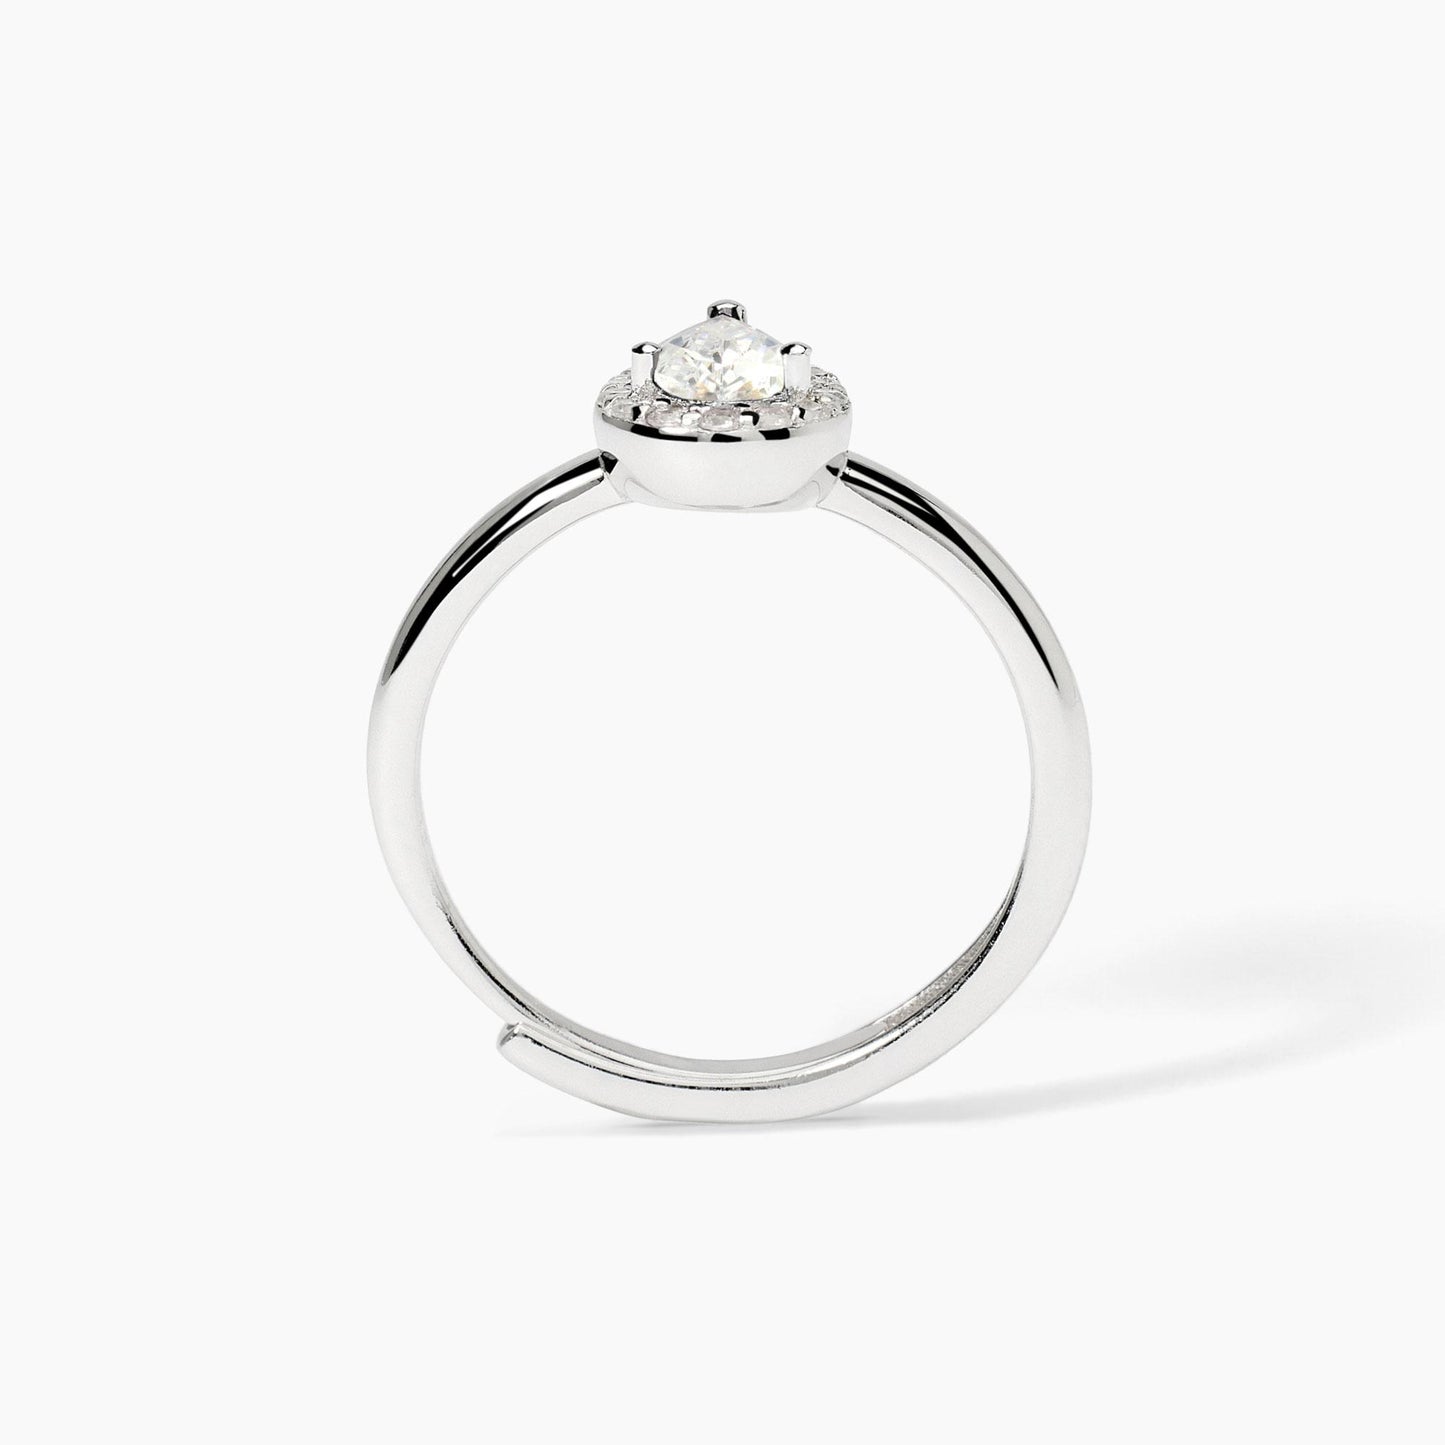 MABINA | Anello in argento con zirconi bianchi | COOL OR RÉTRO? | 523371